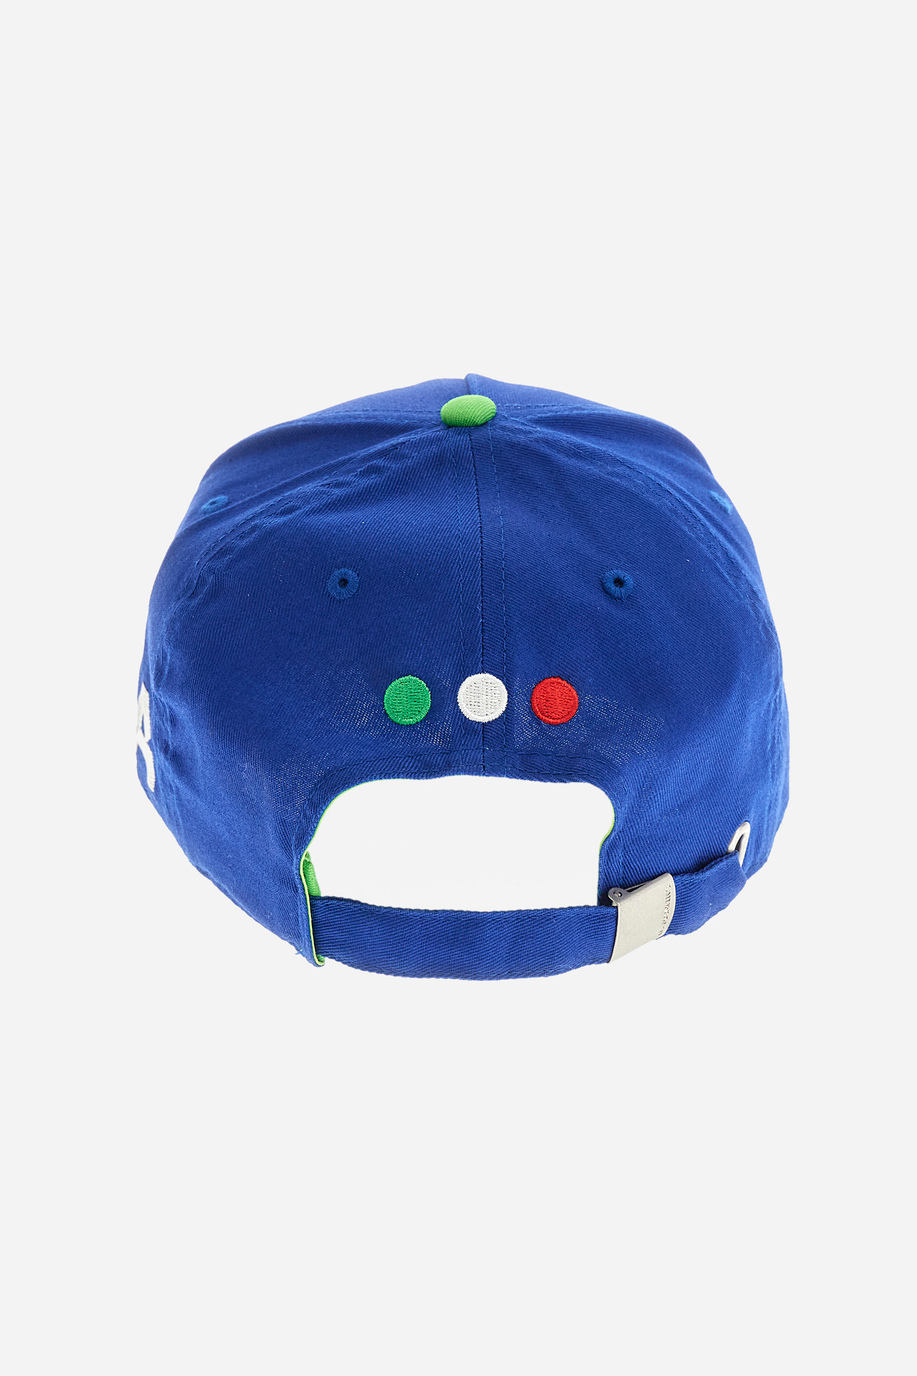 Baseball cap in cotton - Yao - Hats | La Martina - Official Online Shop